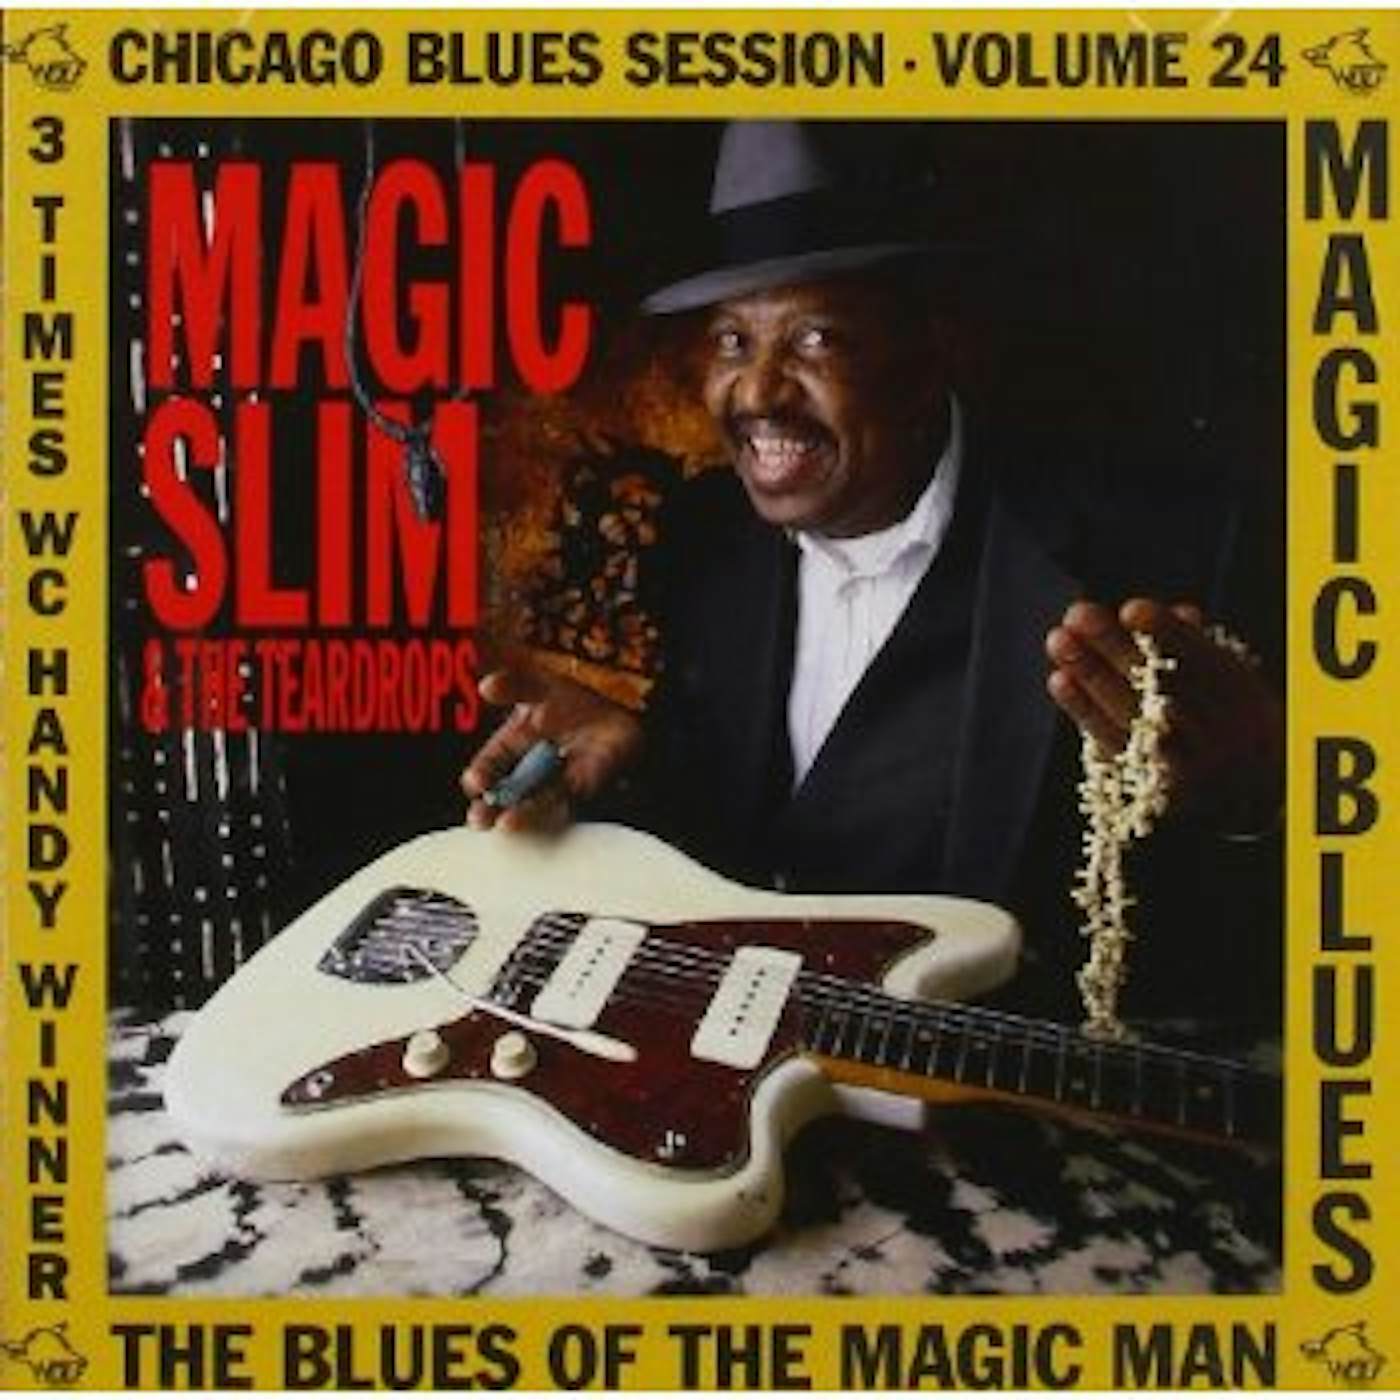 Magic Slim BLUES OF THE MAGIC MAN CD